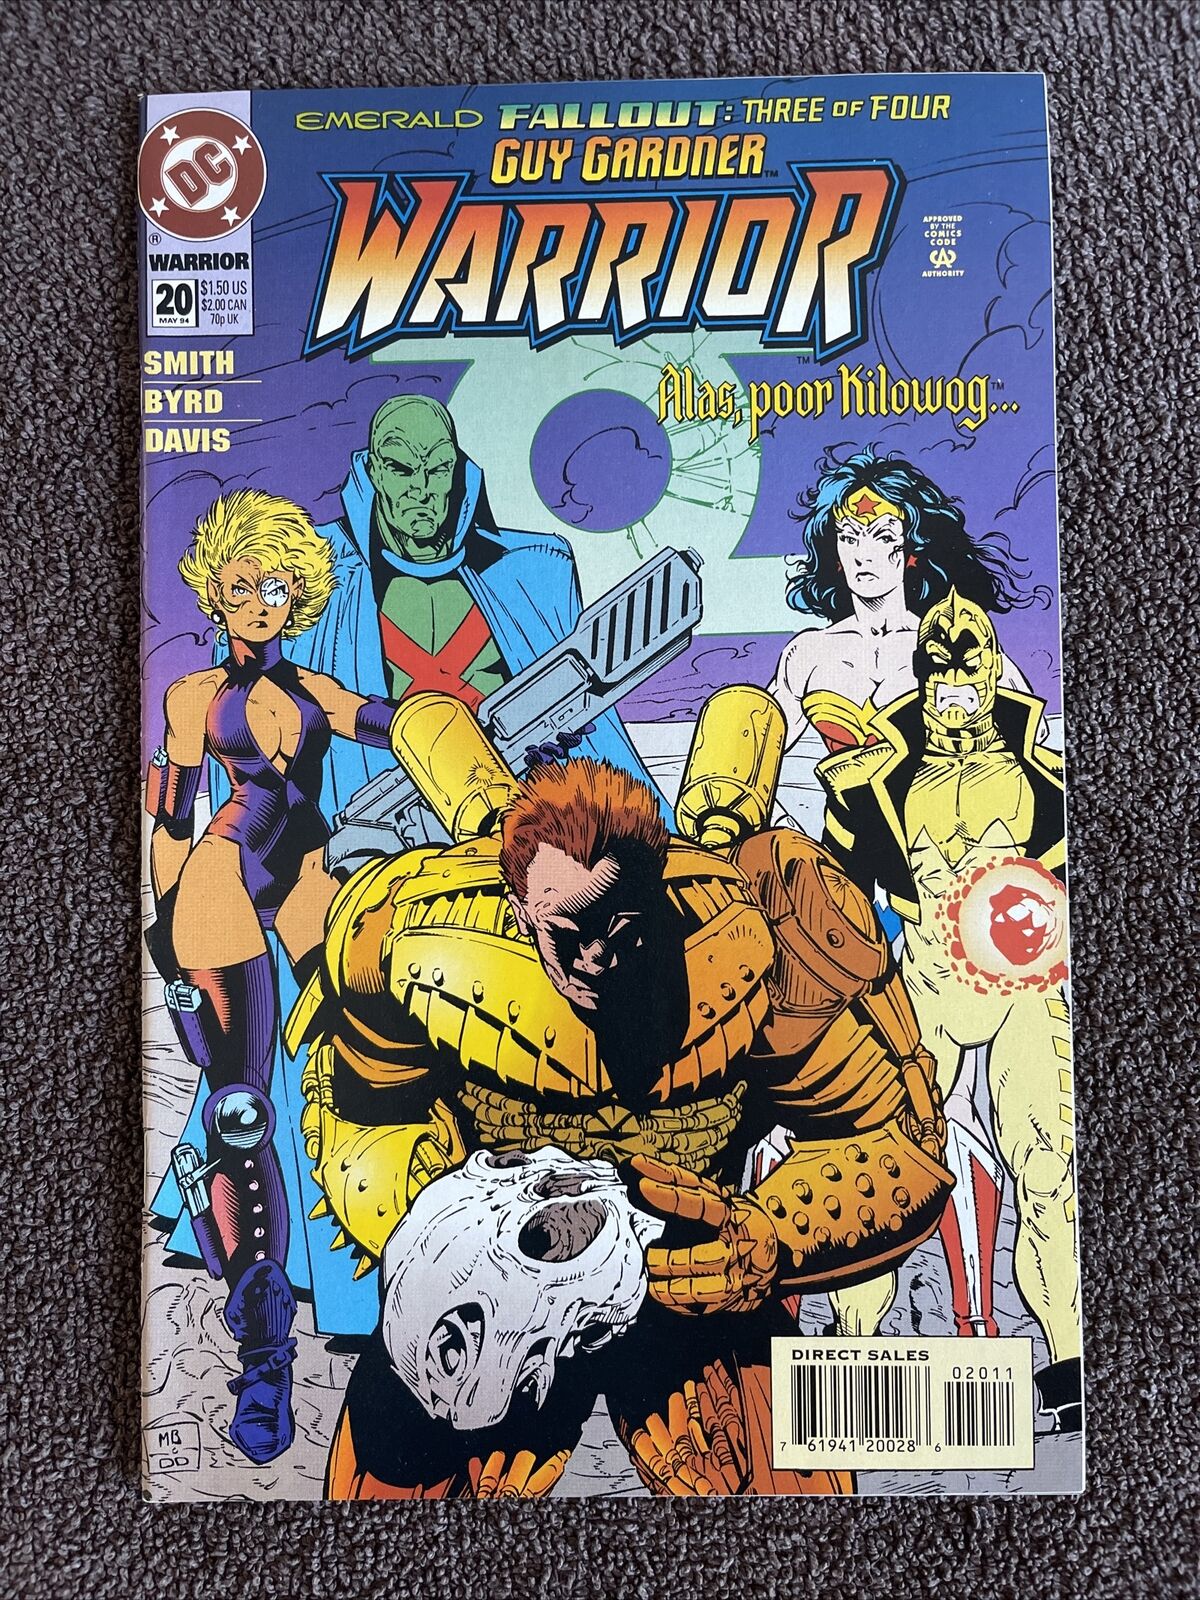 GUY GARDNER: WARRIOR #20 (DC, 1994) Justice League International